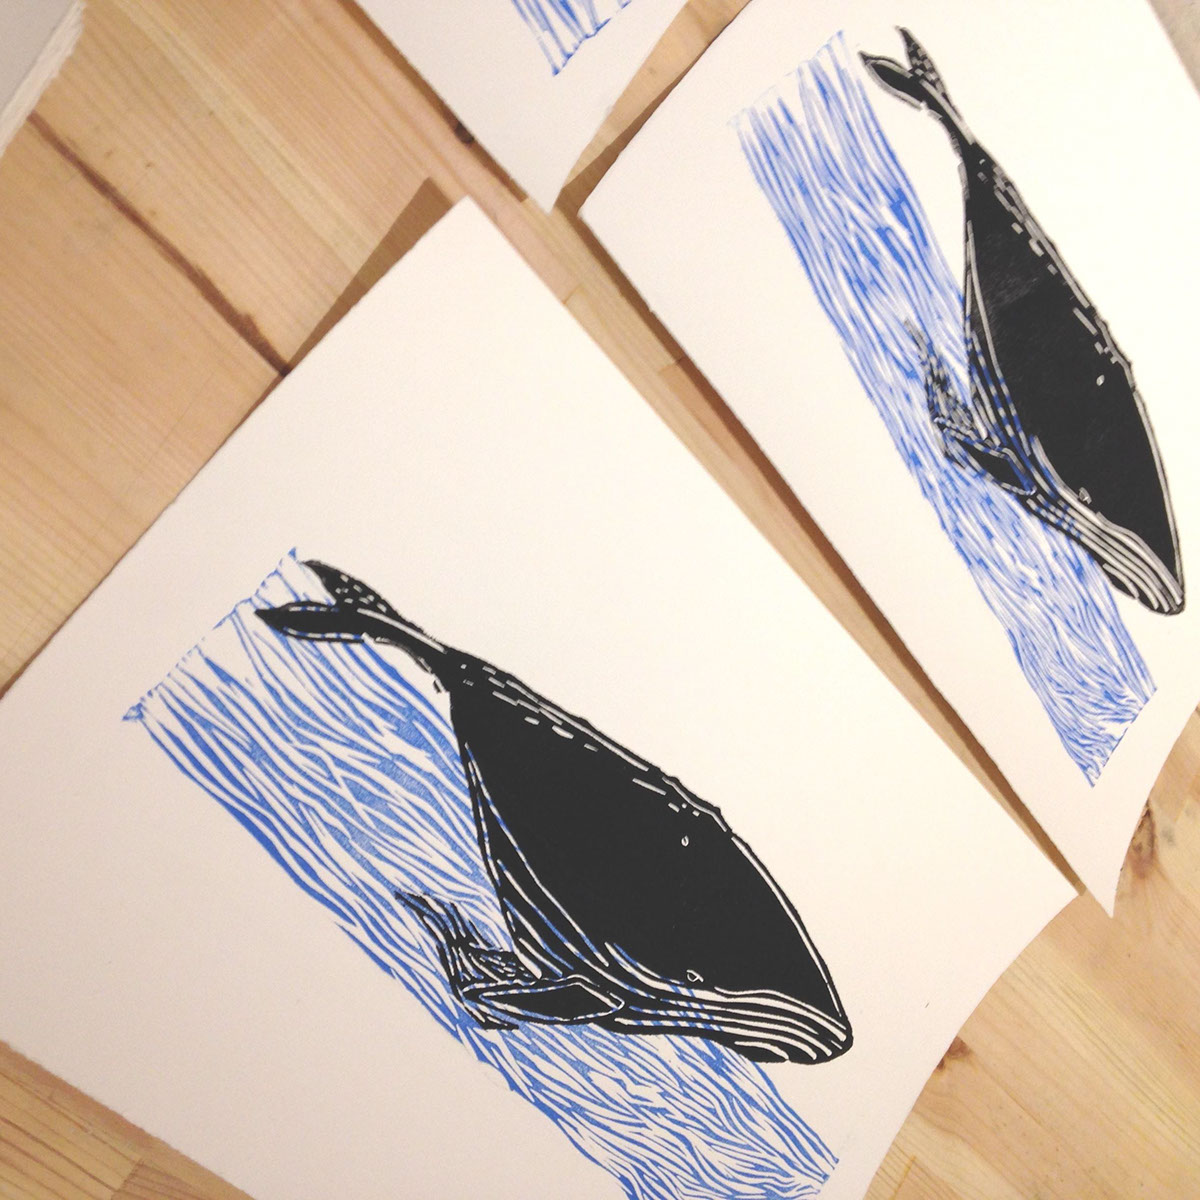 Whale stamp balena balene xilograpia xylography linoleum linoleum cut